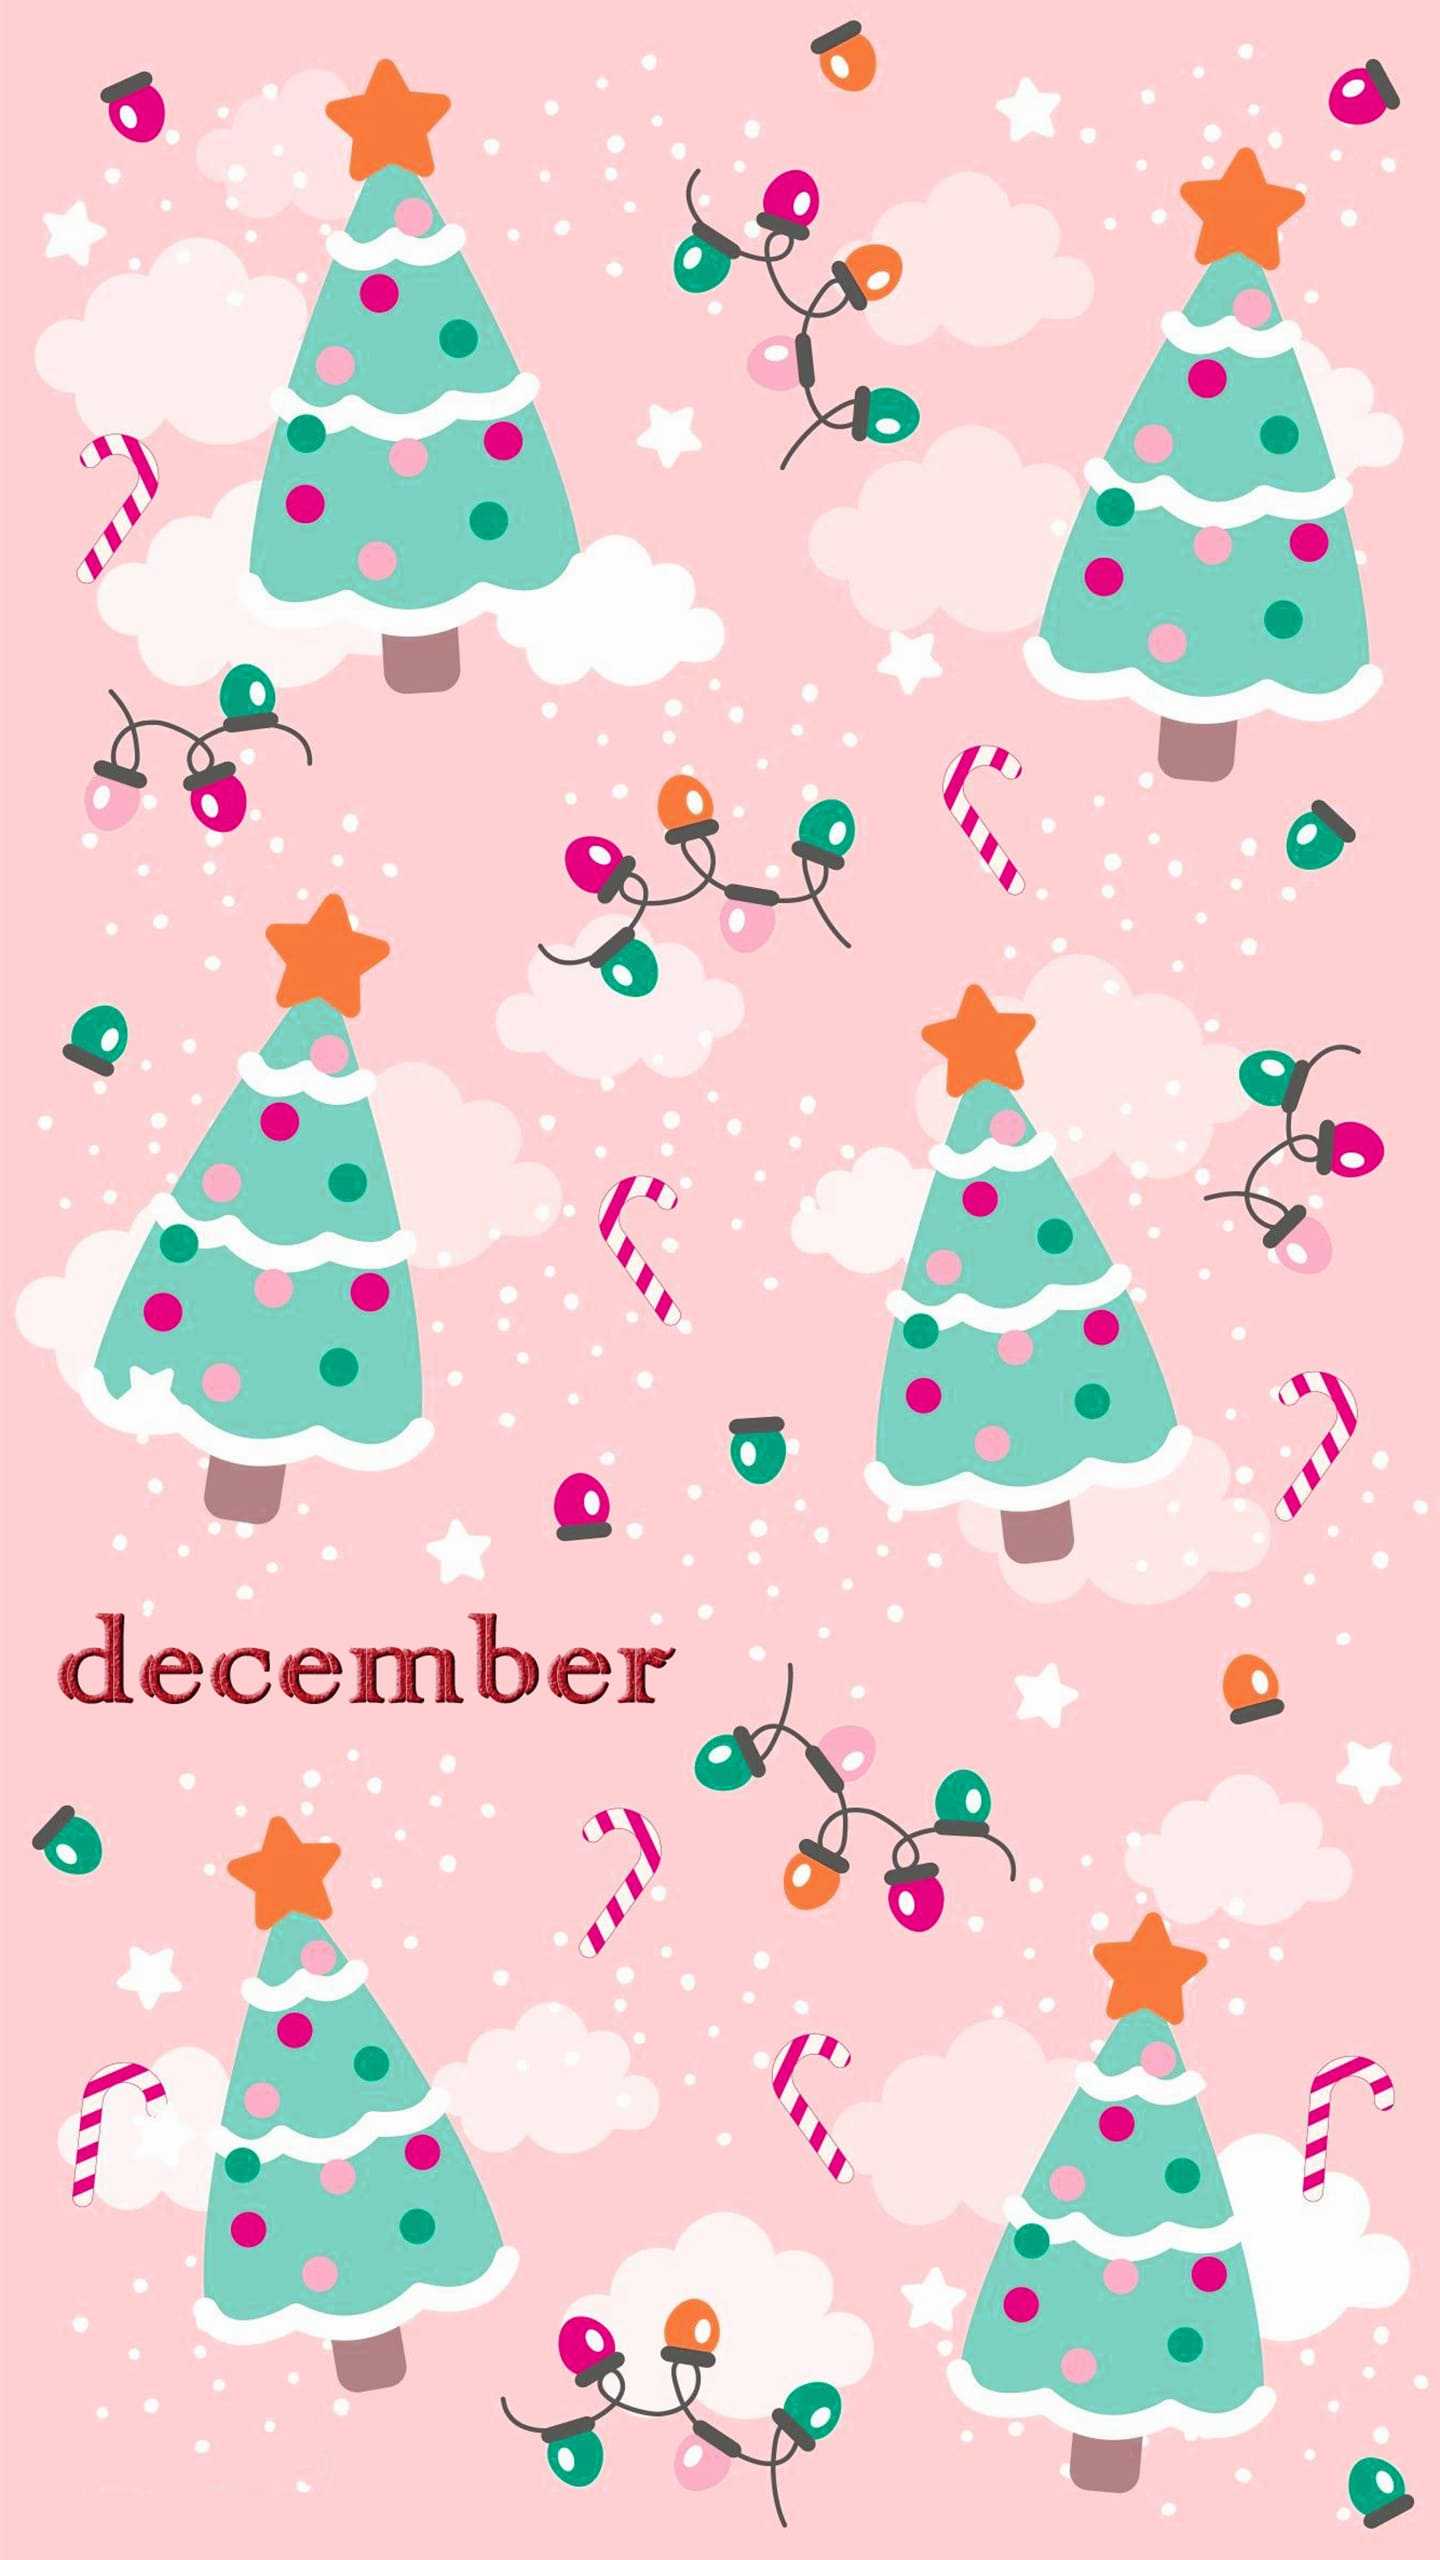 December Wallpaper - iXpap